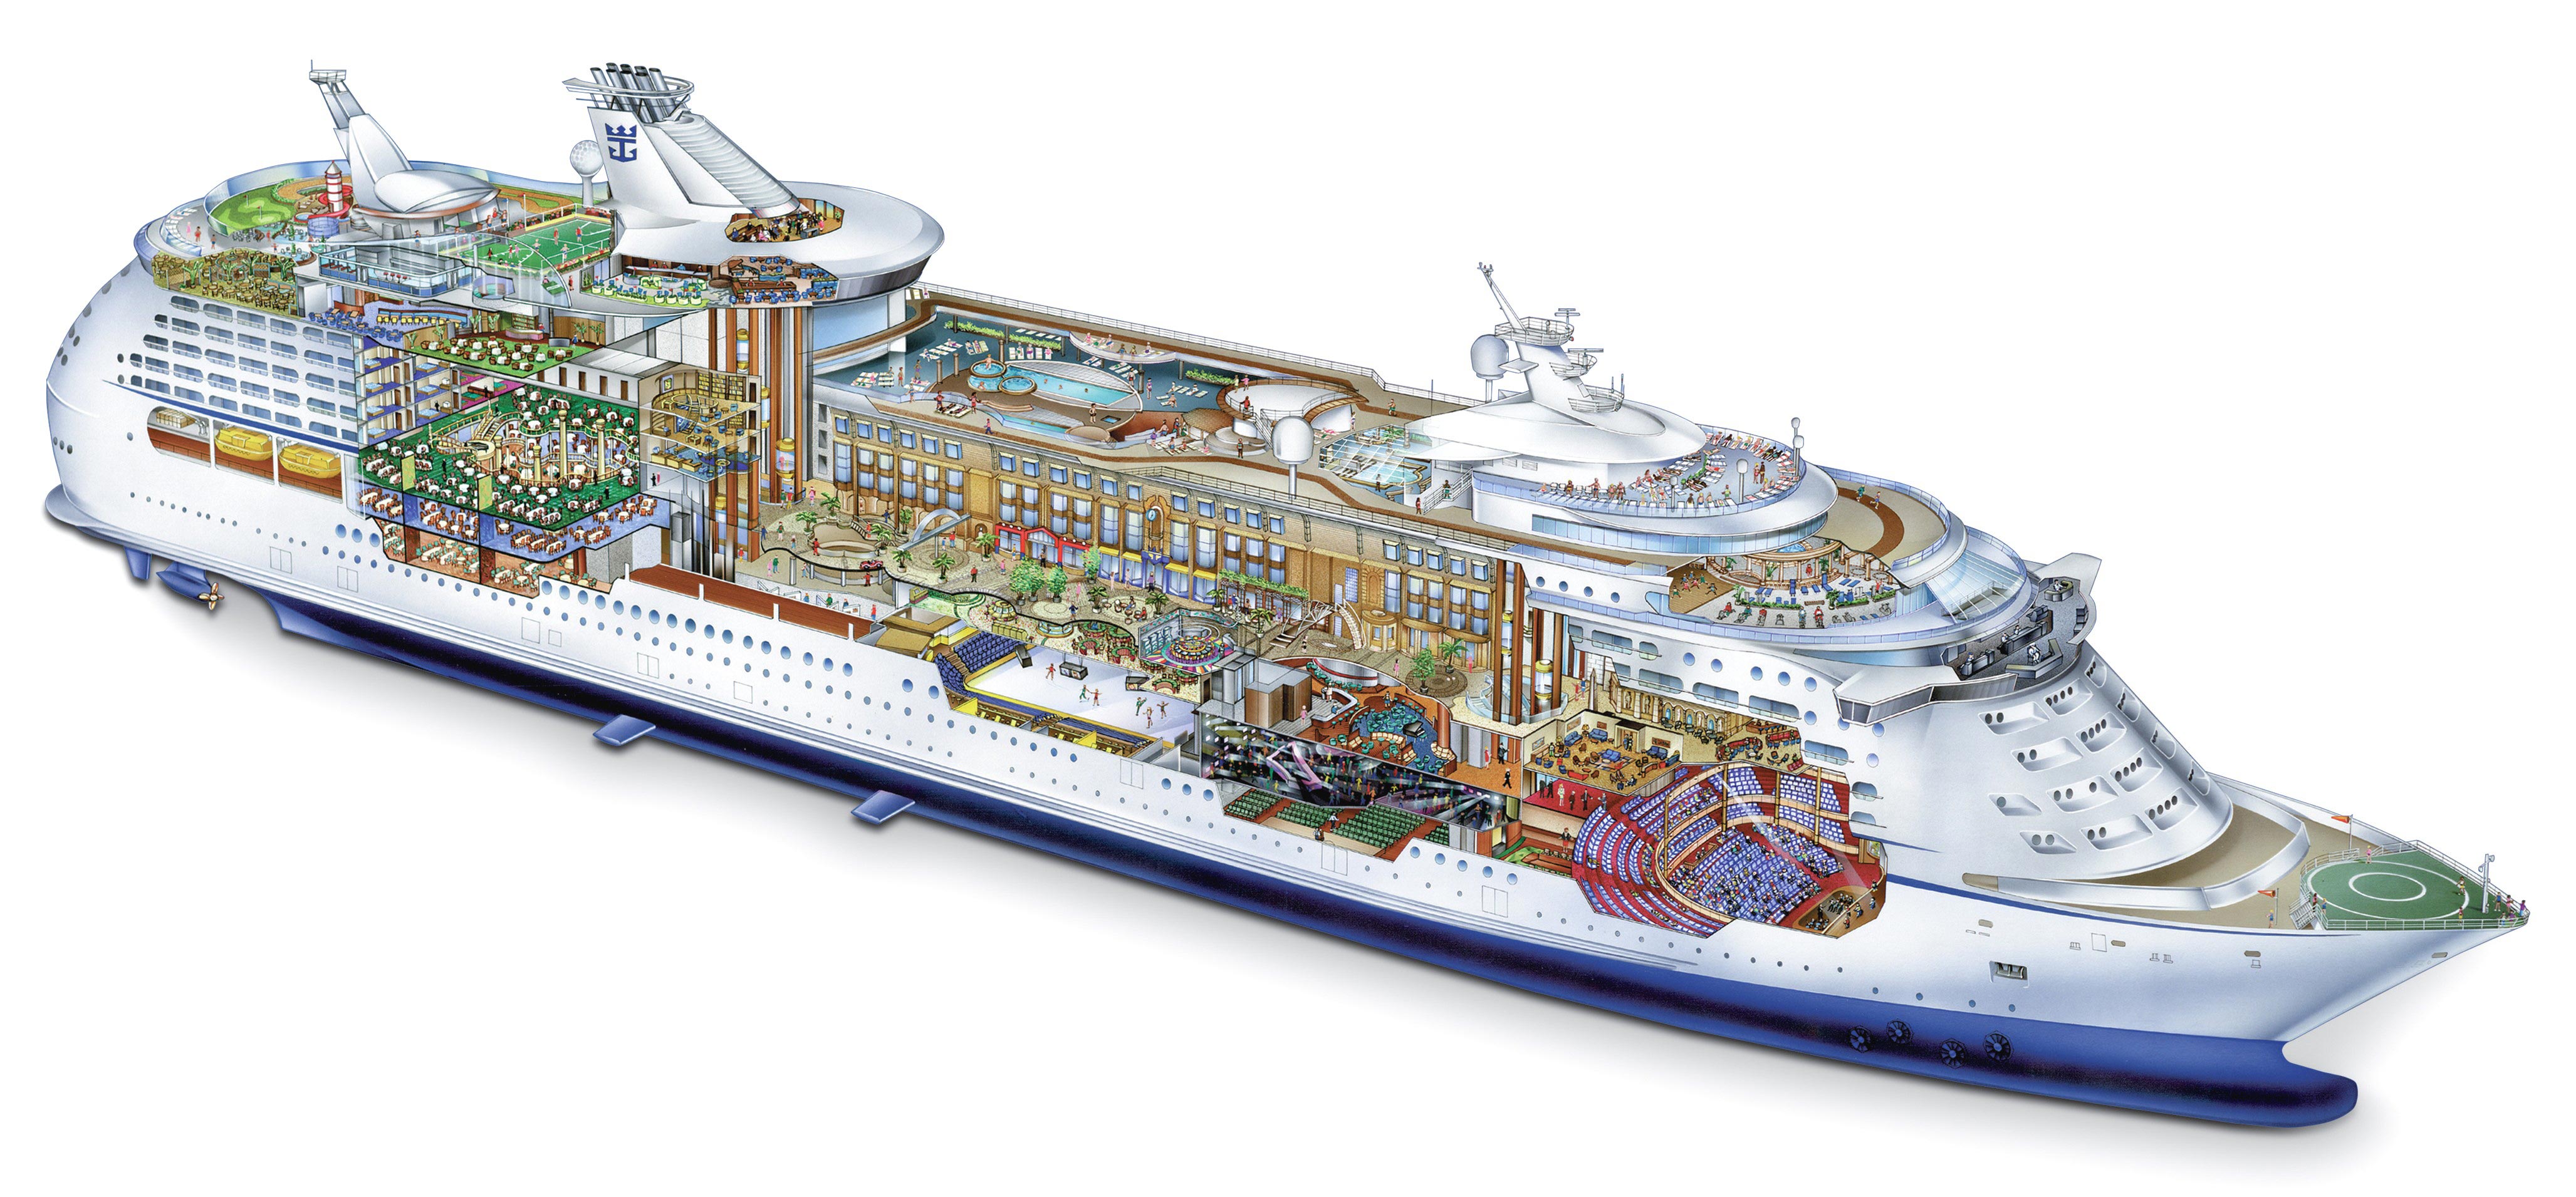 Royal Caribbean Voyager of the Seas cutaway